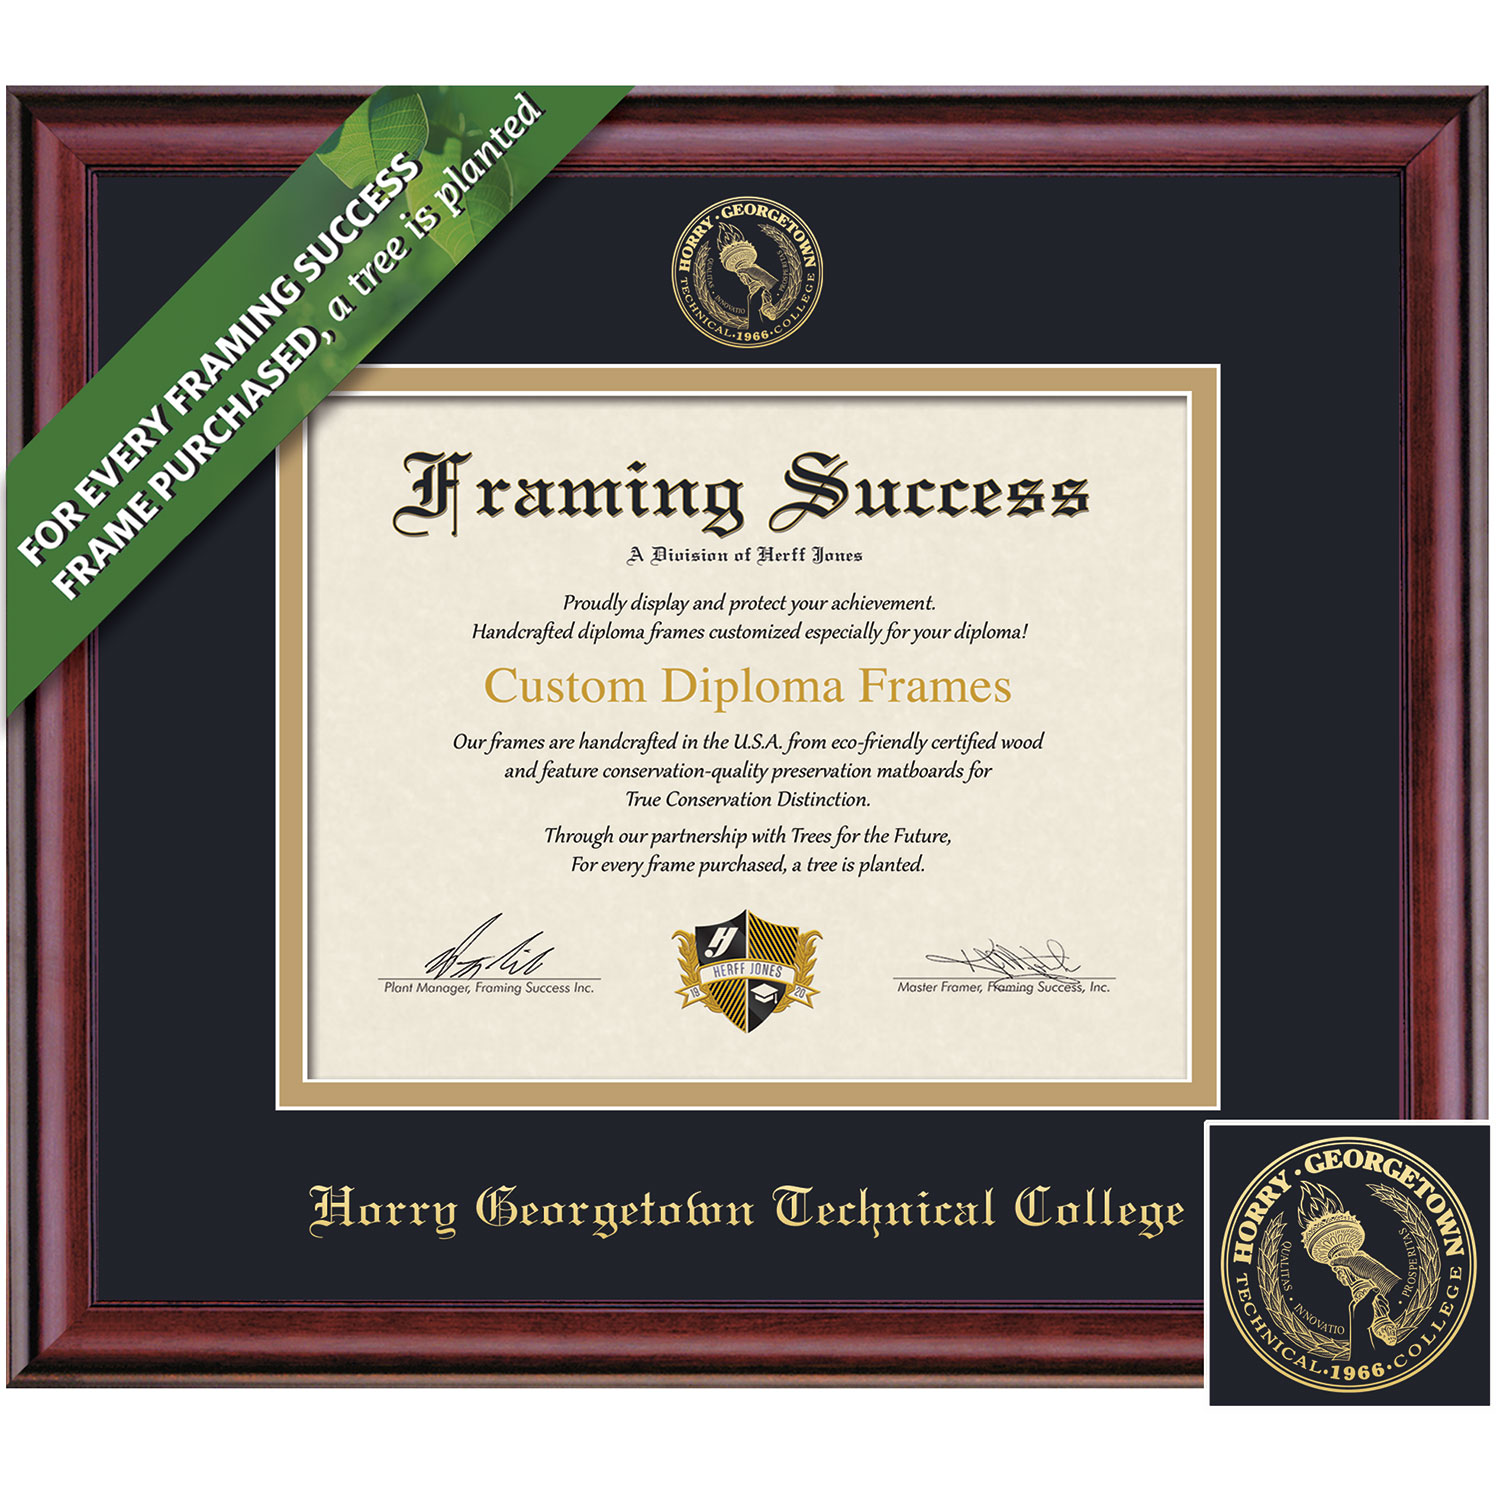 Framing Success 8.5 x 11 Classic Gold Embossed School Seal Associates Diploma Frame